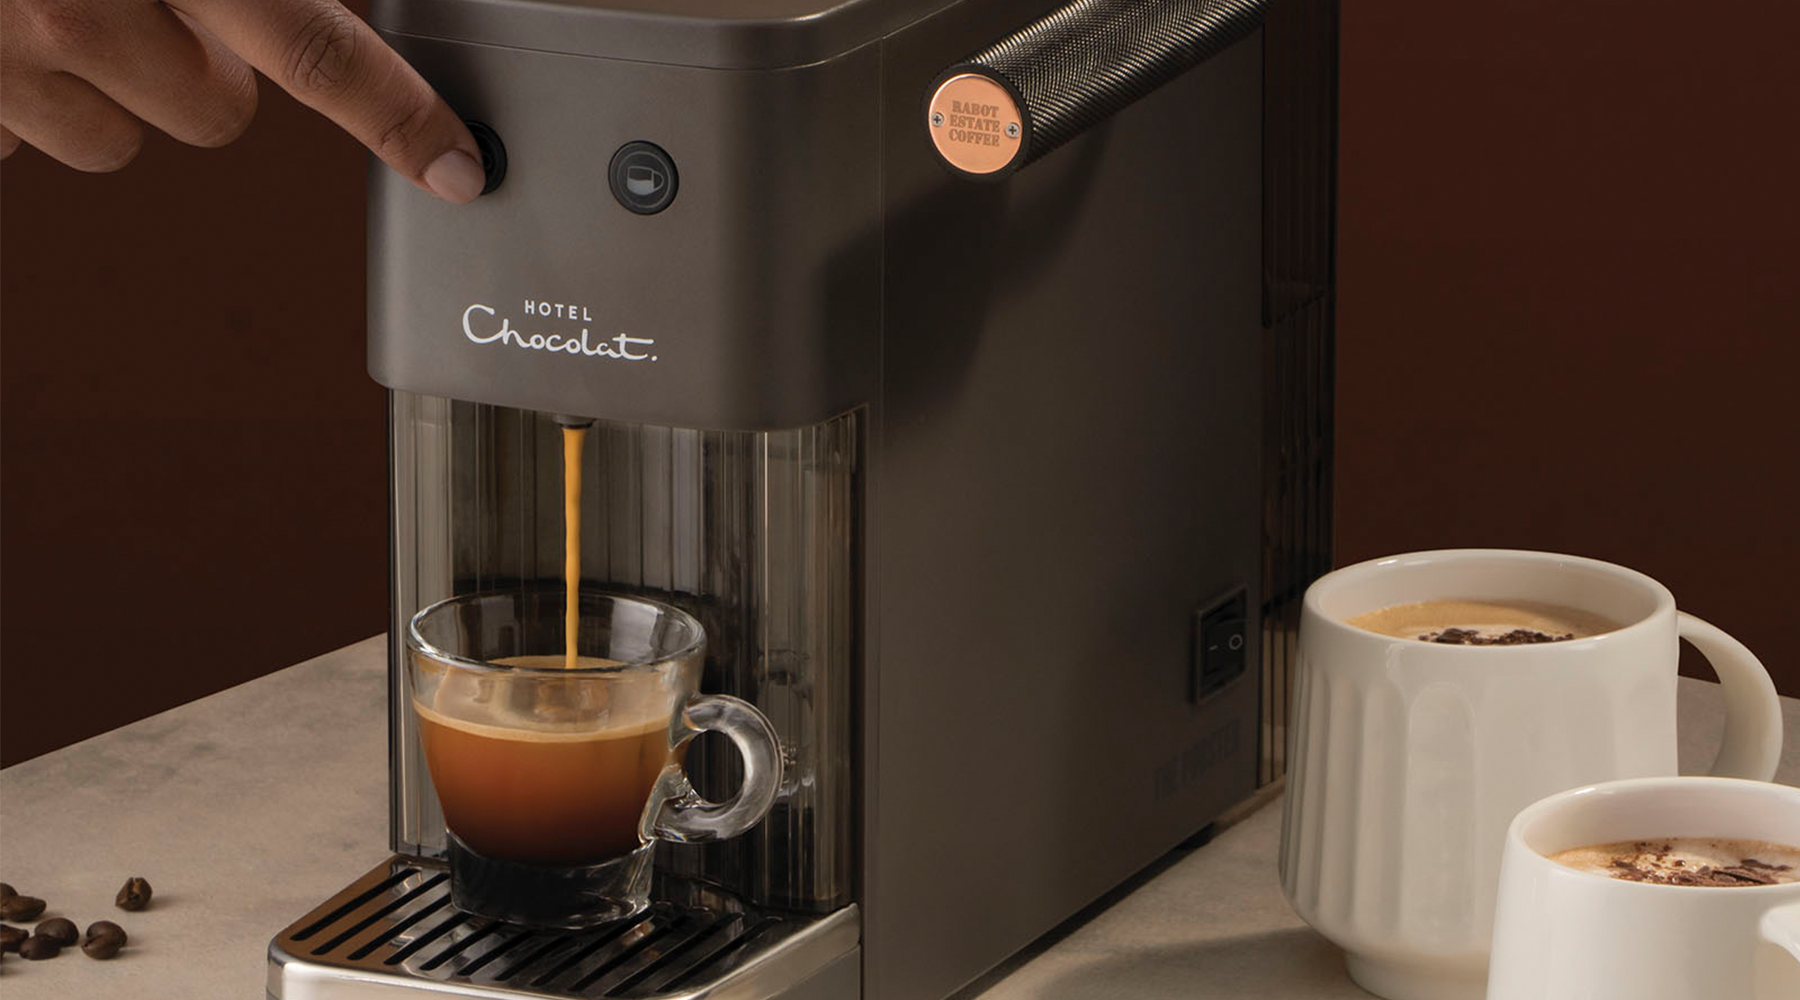 Hotel Chocolat Podster Coffee Machine